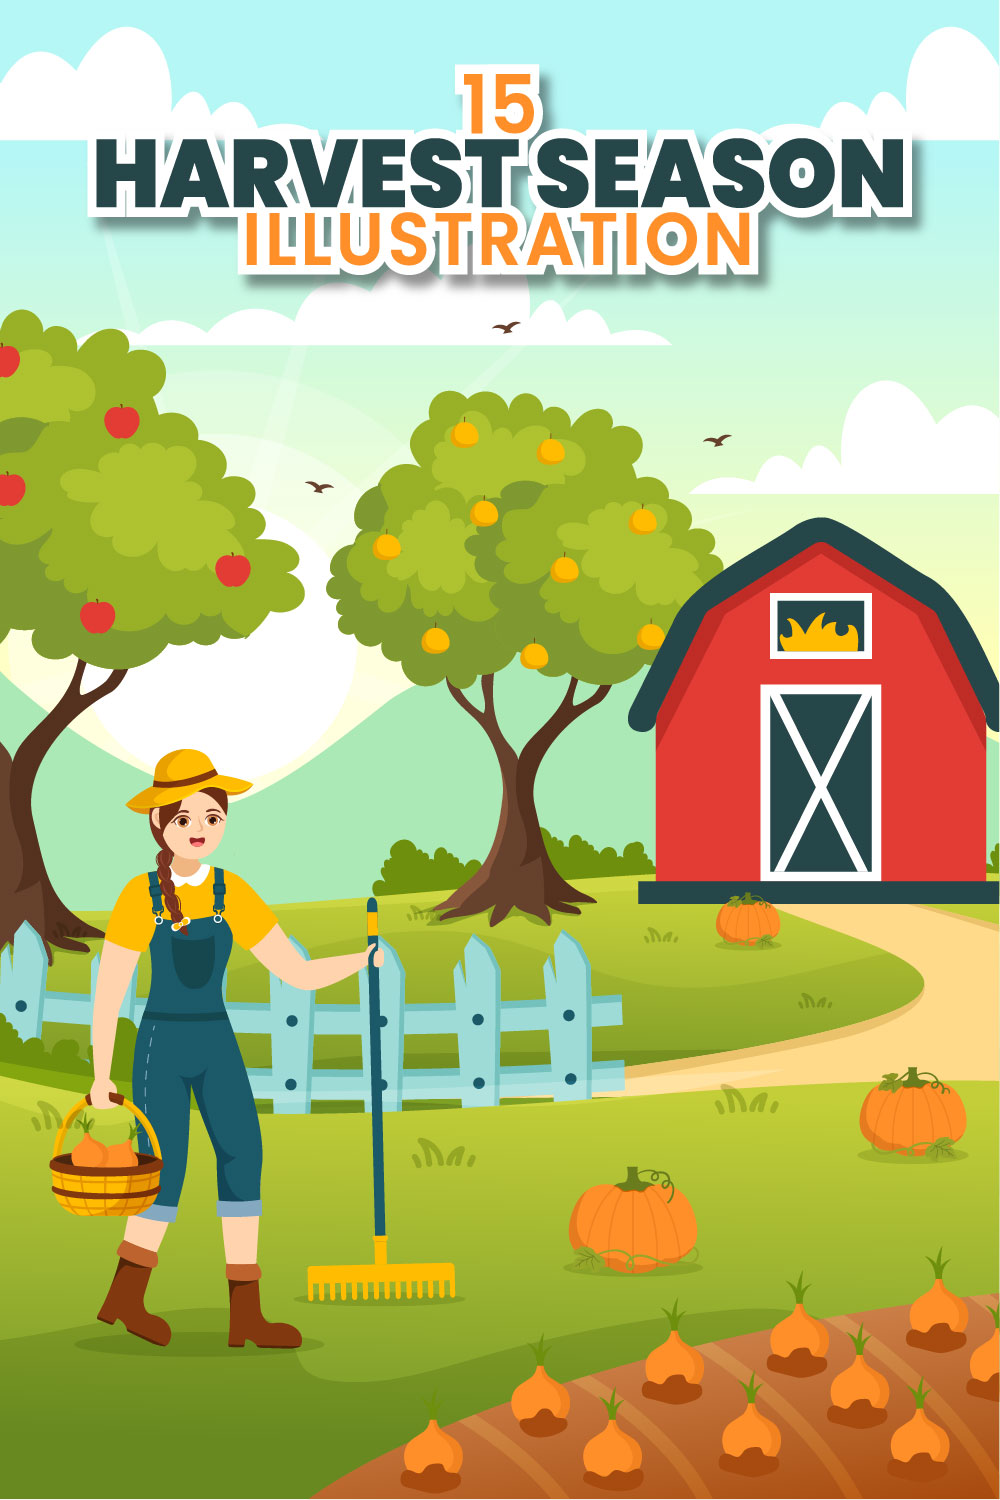 15 Harvest Season Vector Illustration pinterest preview image.